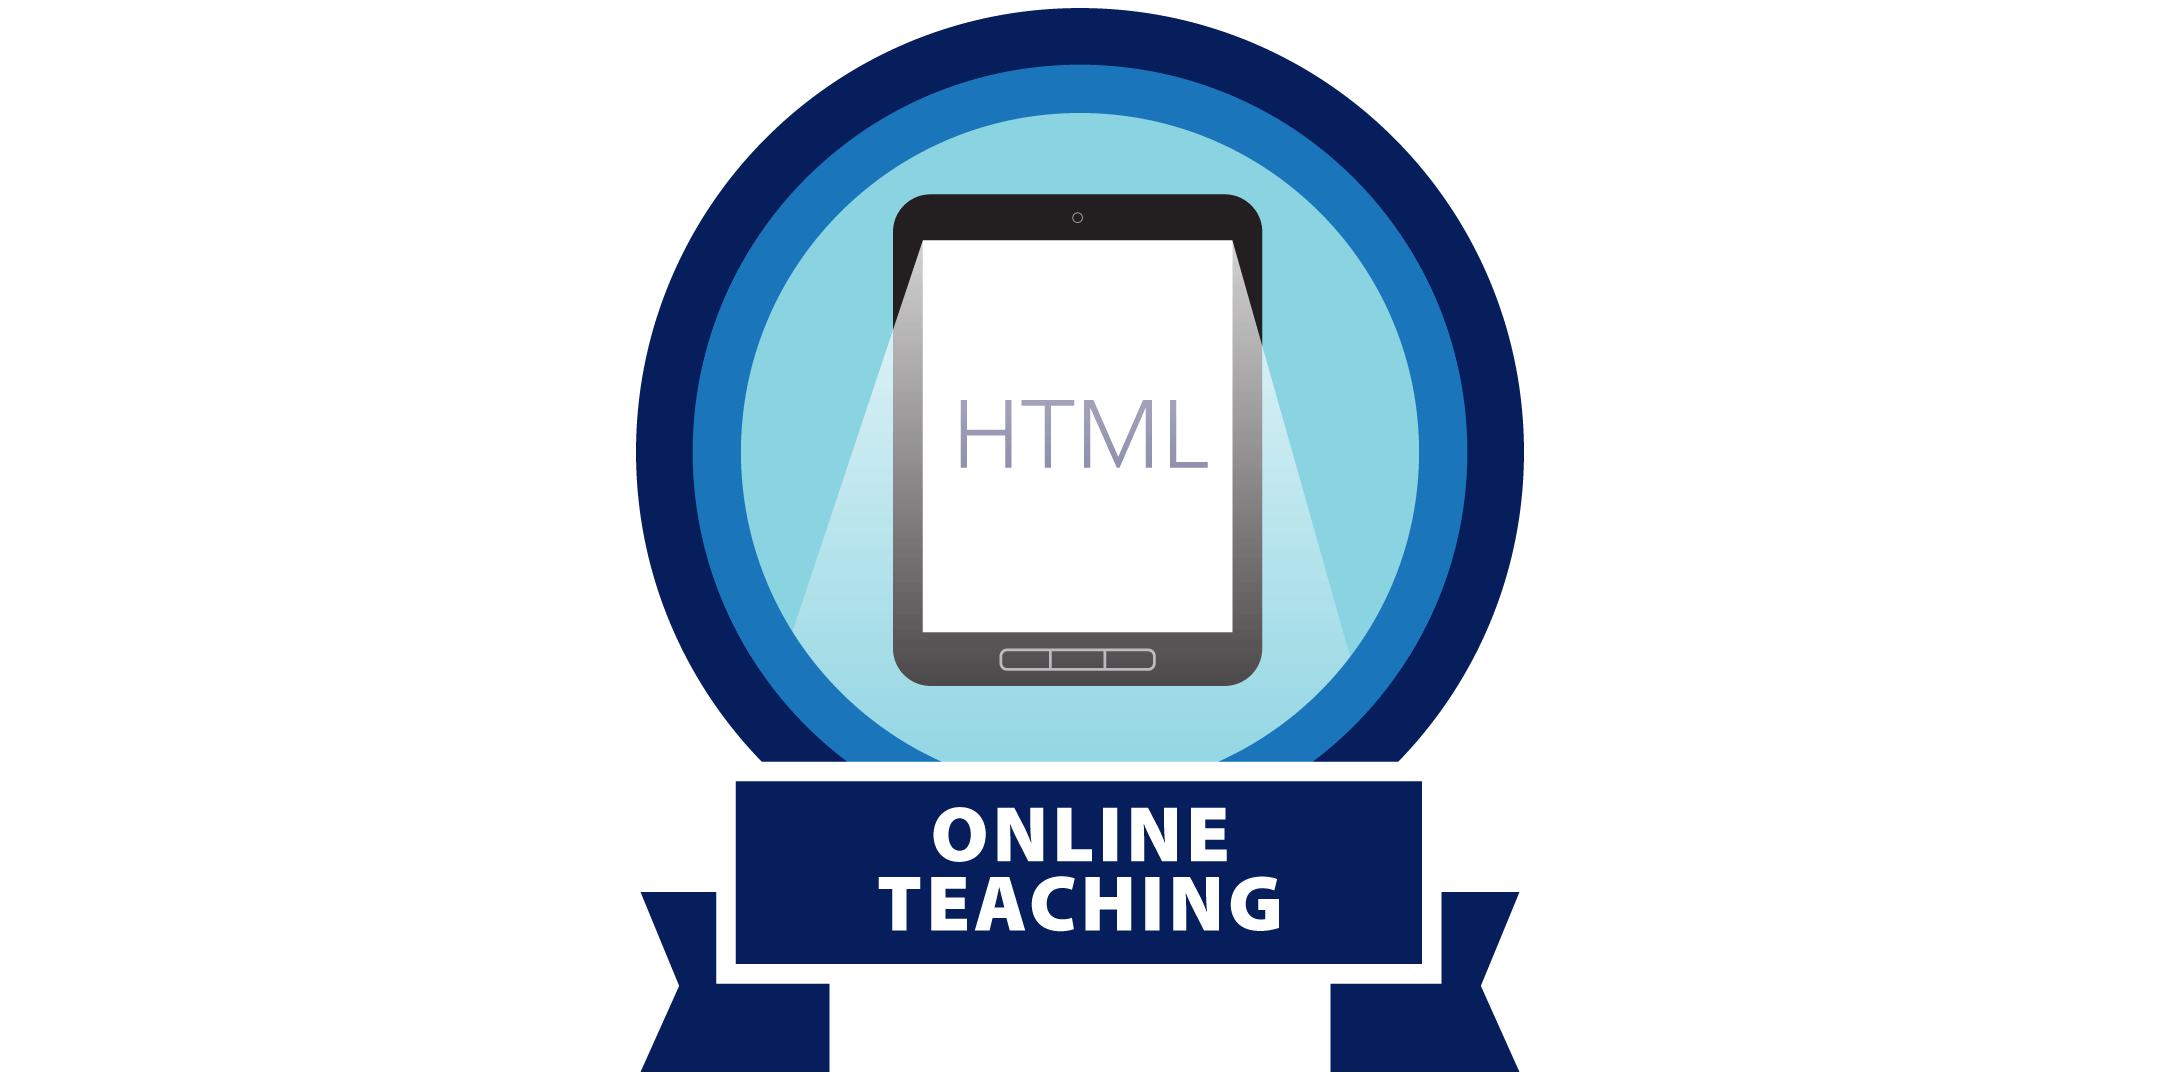 *Best Practices in Online Teaching